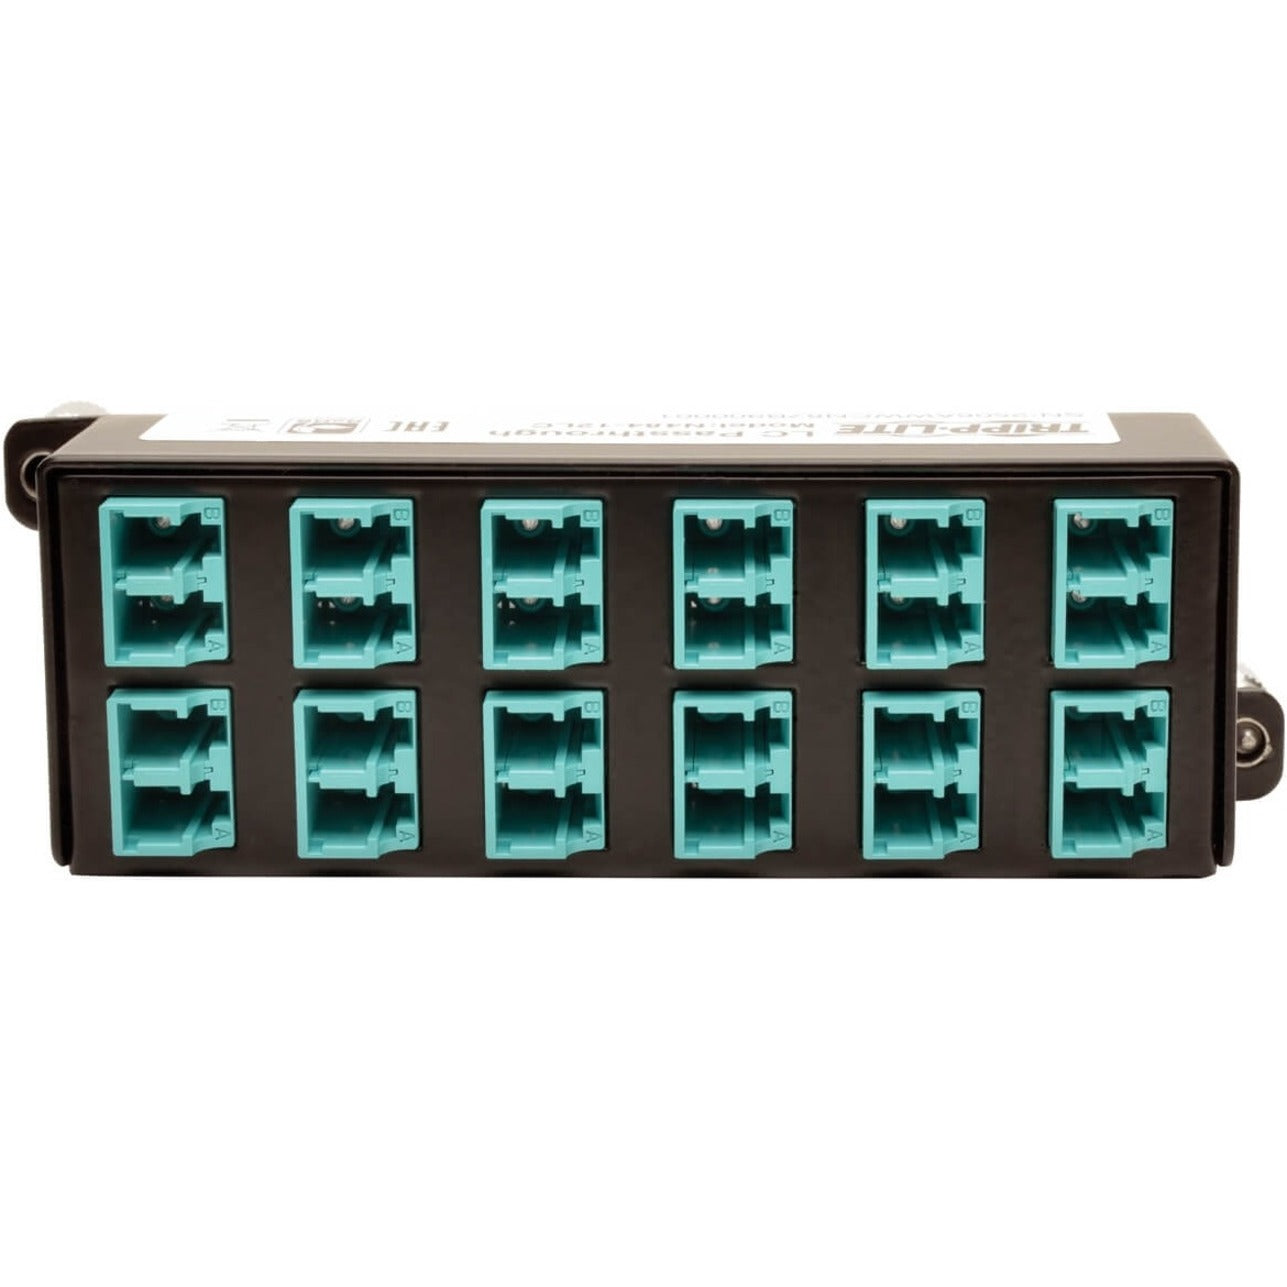 Tripp Lite N484-12LC 10GbE Pass-Through Cassette - (x12) LC Duplex, Network Patch Panel